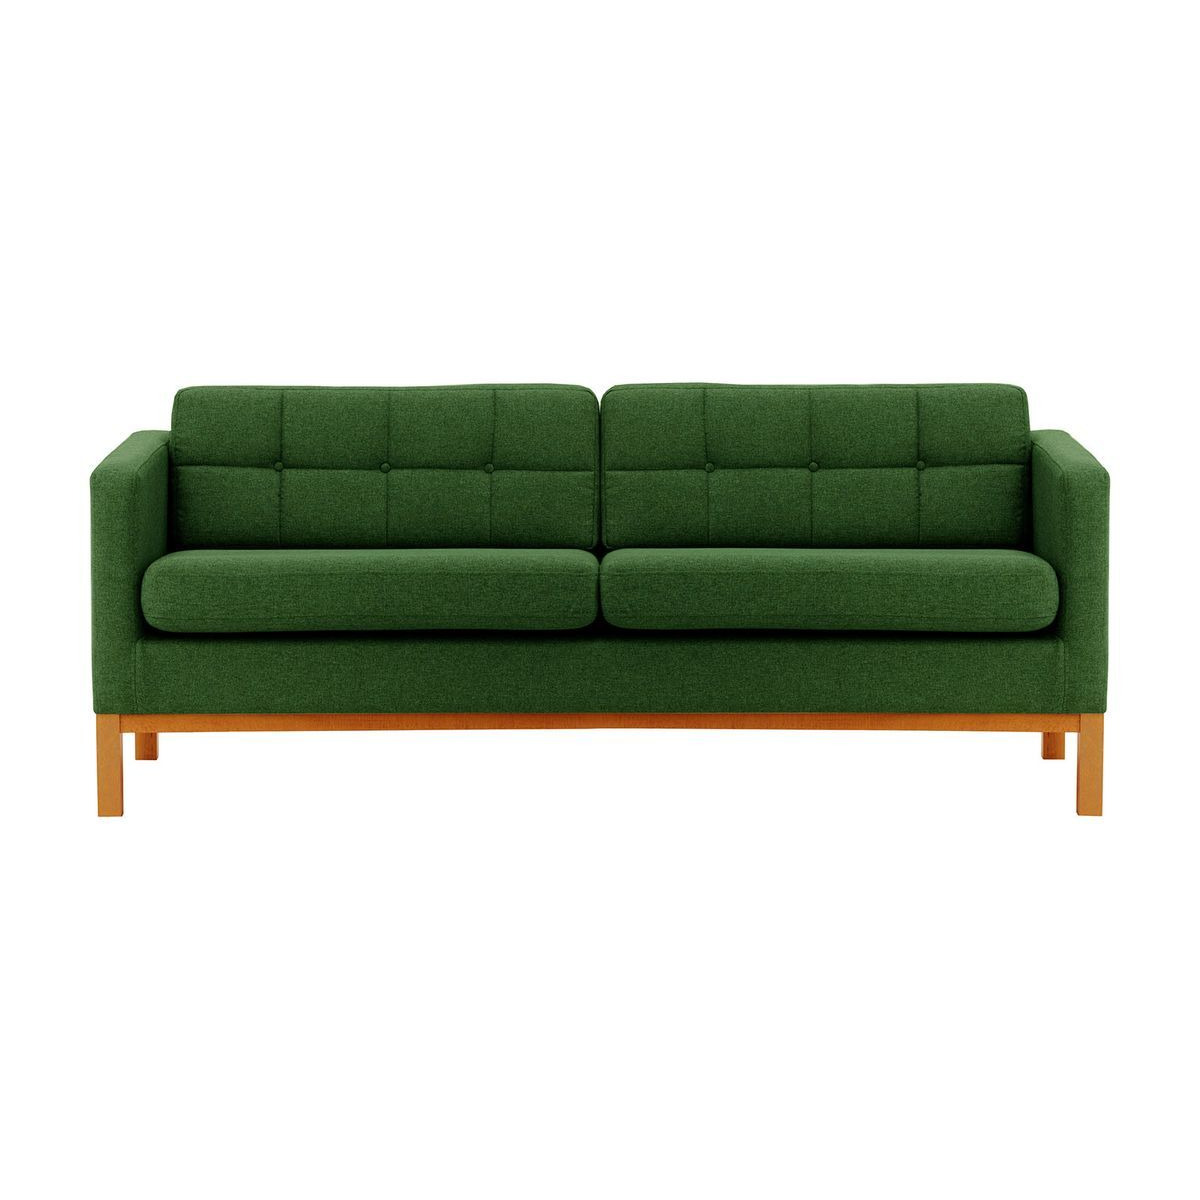 Normann 3 Seater Sofa, dark green, Leg colour: aveo - image 1